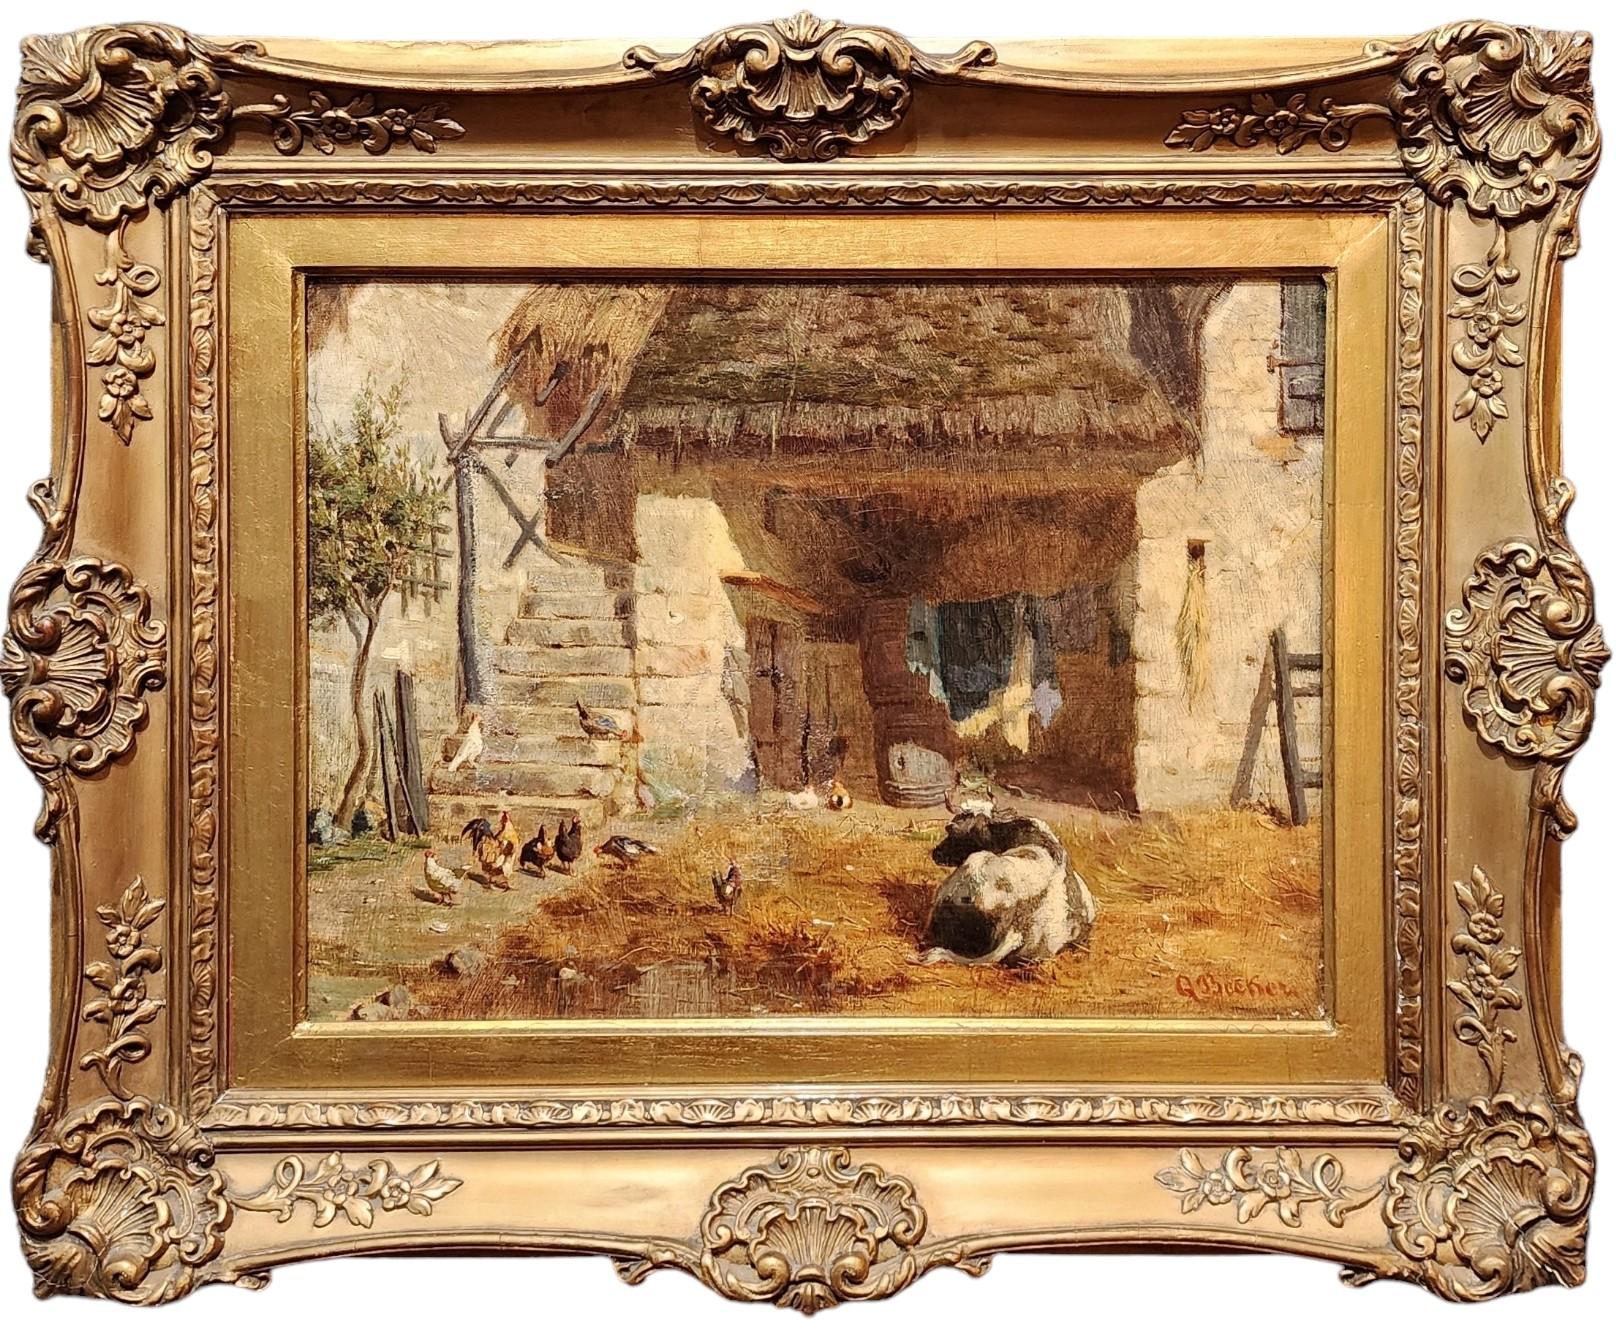 Albert Q. Becker Animal Painting – In The Barnyard, Bauernhofszene des späten 19. Jahrhunderts, Kühe, Hühner